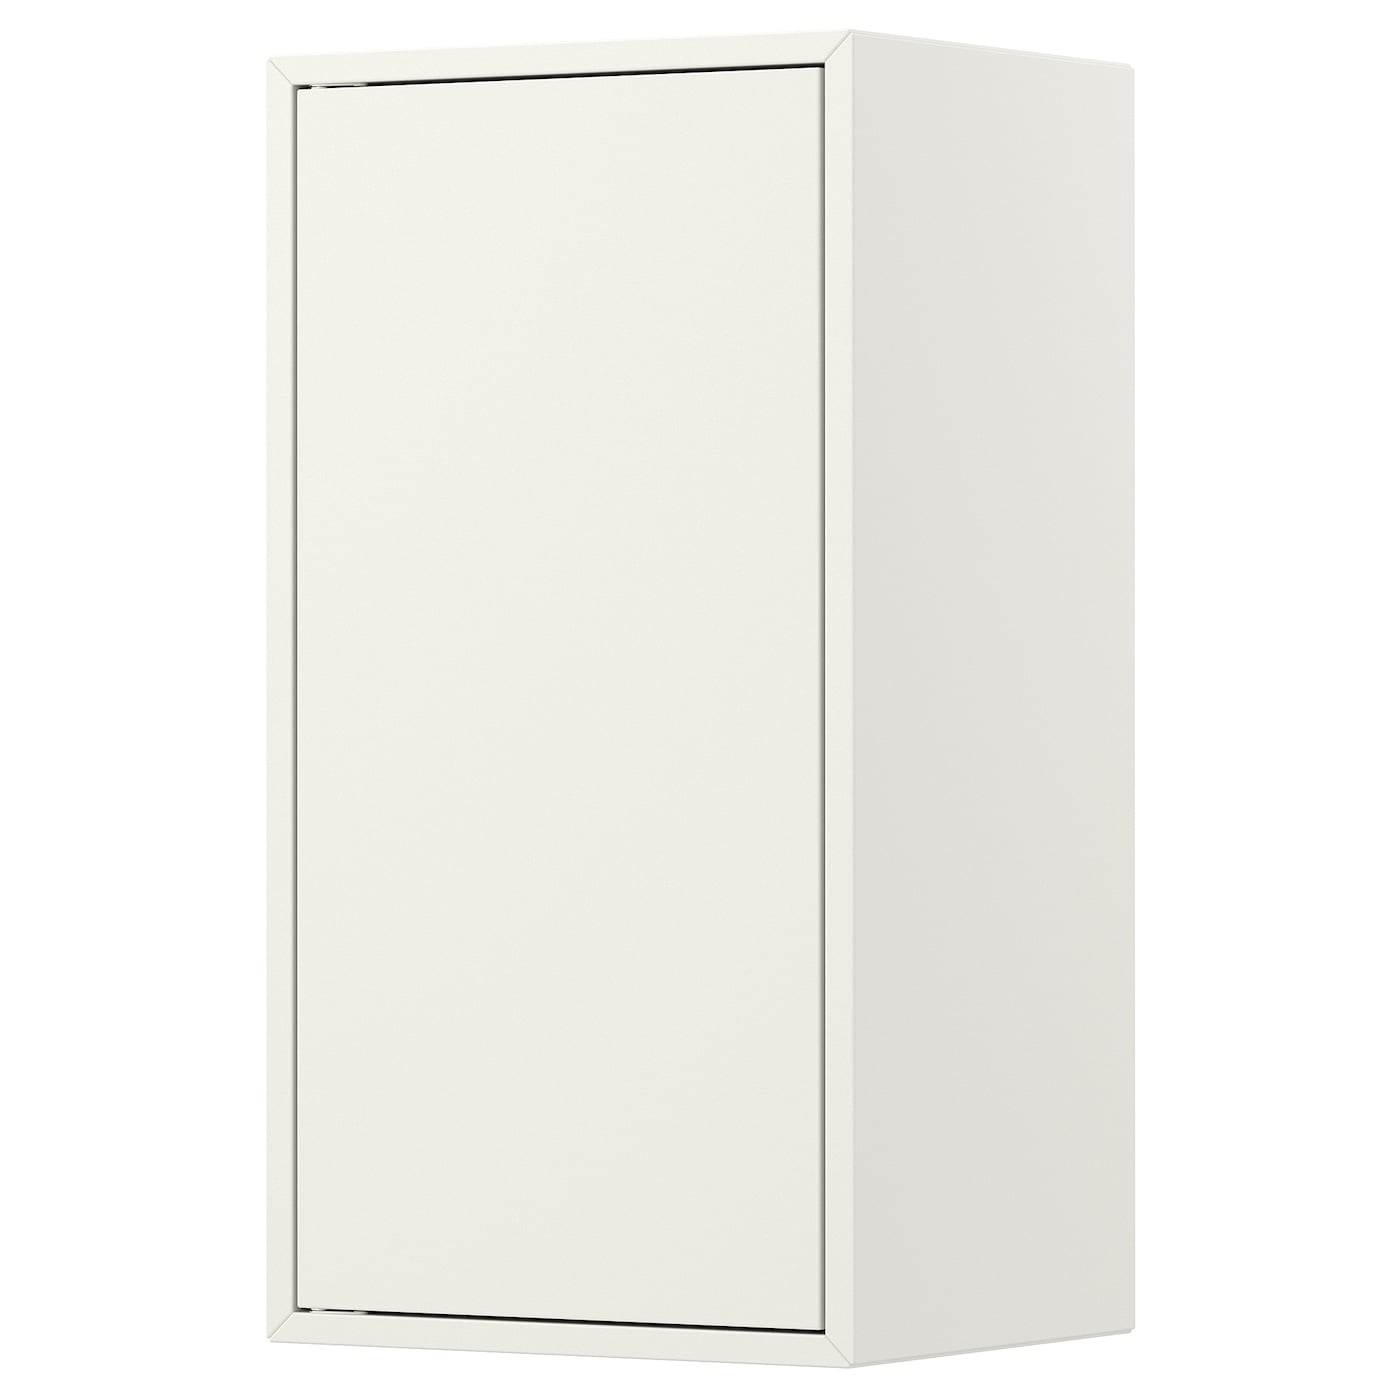 Шкаф - EKET IKEA/ЭКЕТ ИКЕА, 35x35x70,белый